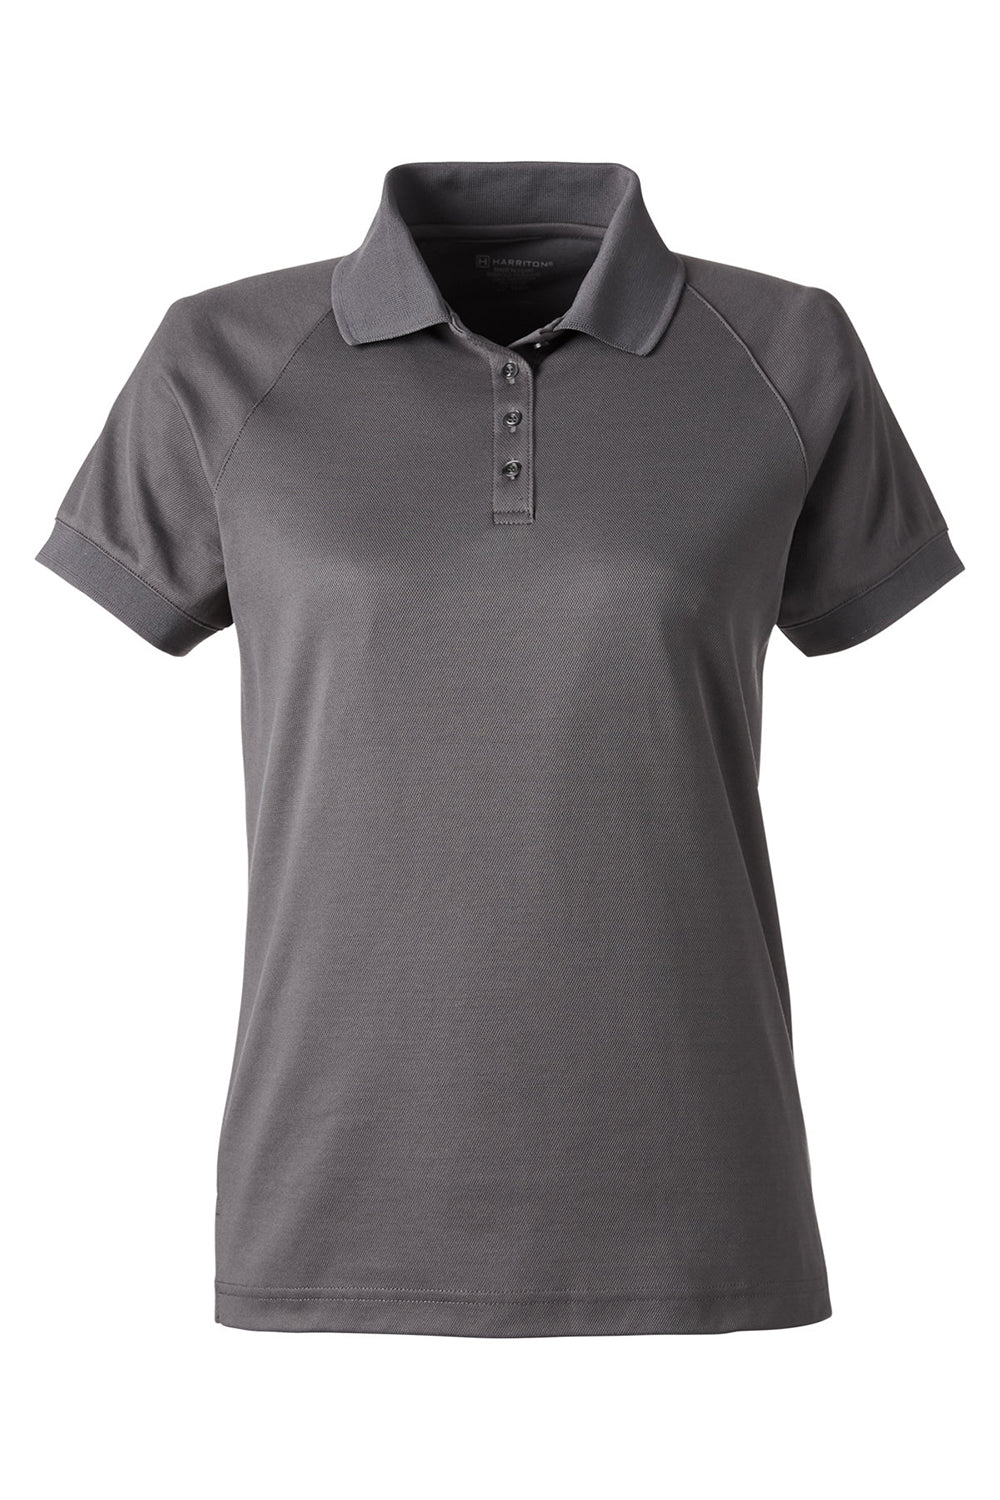 Harriton M208W Womens Charge Moisture Wicking Short Sleeve Polo Shirt Dark Charcoal Grey Flat Front